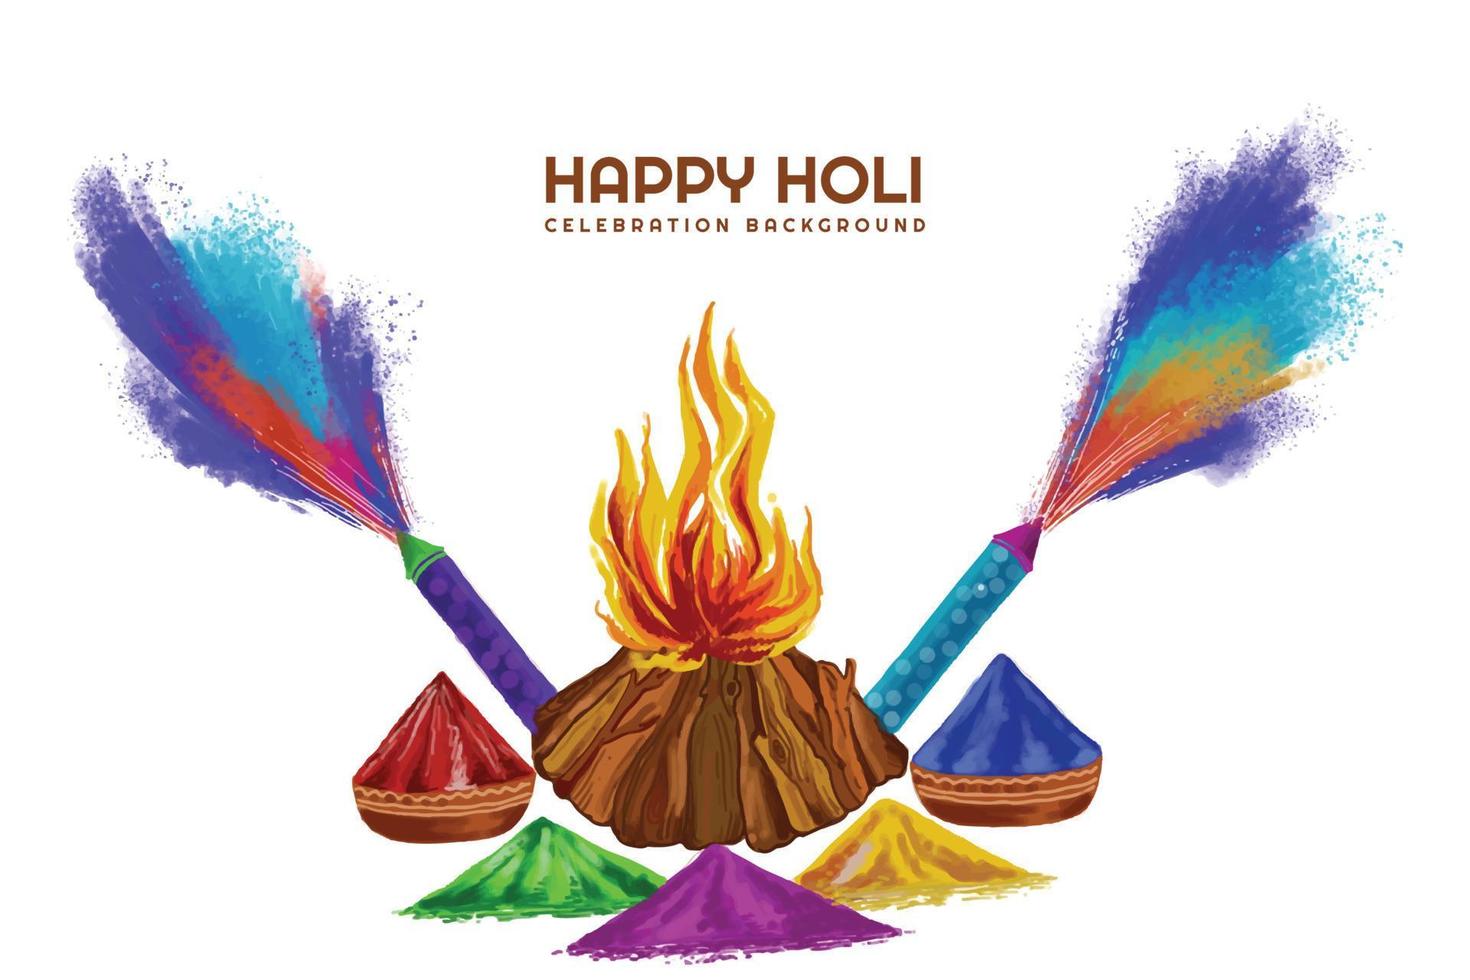 Happy holi colorful background for festival of colors celebration design vector